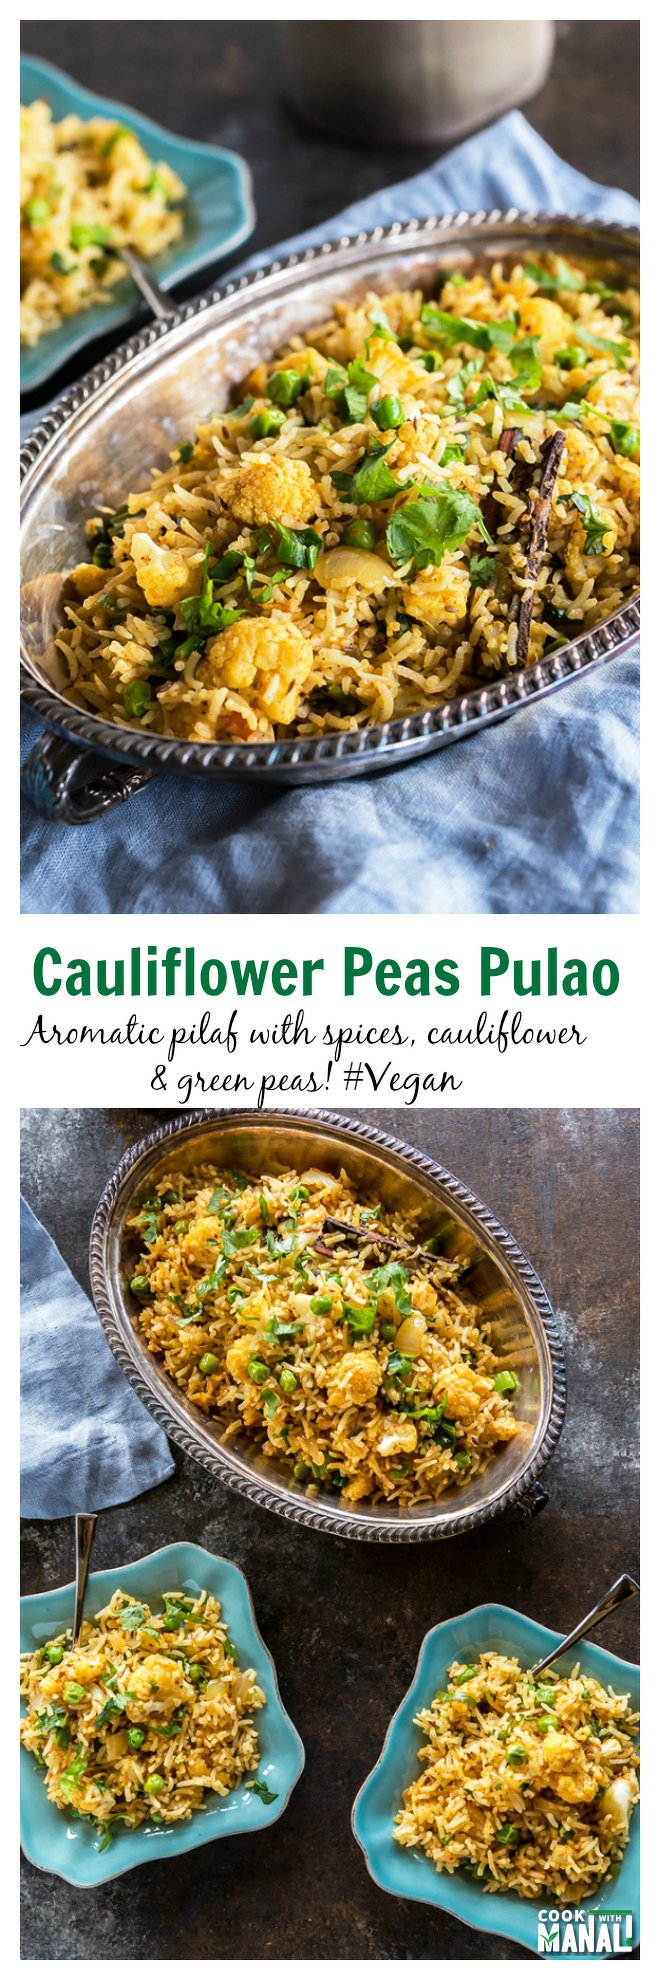 Cauliflower Peas Pulao Collage